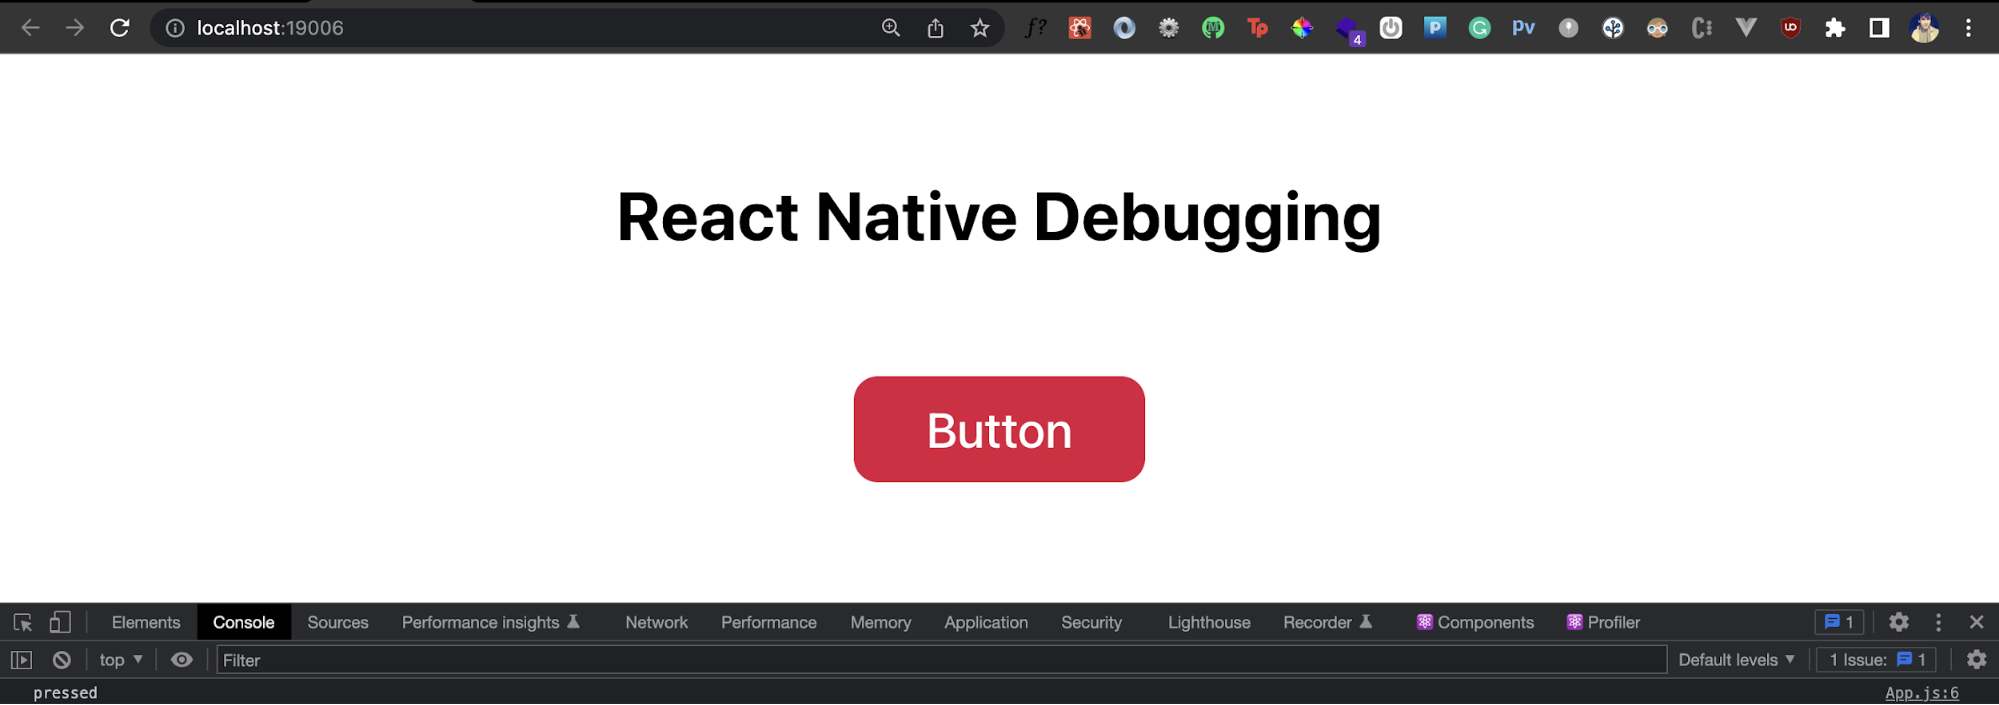 react-native-debugging-image10